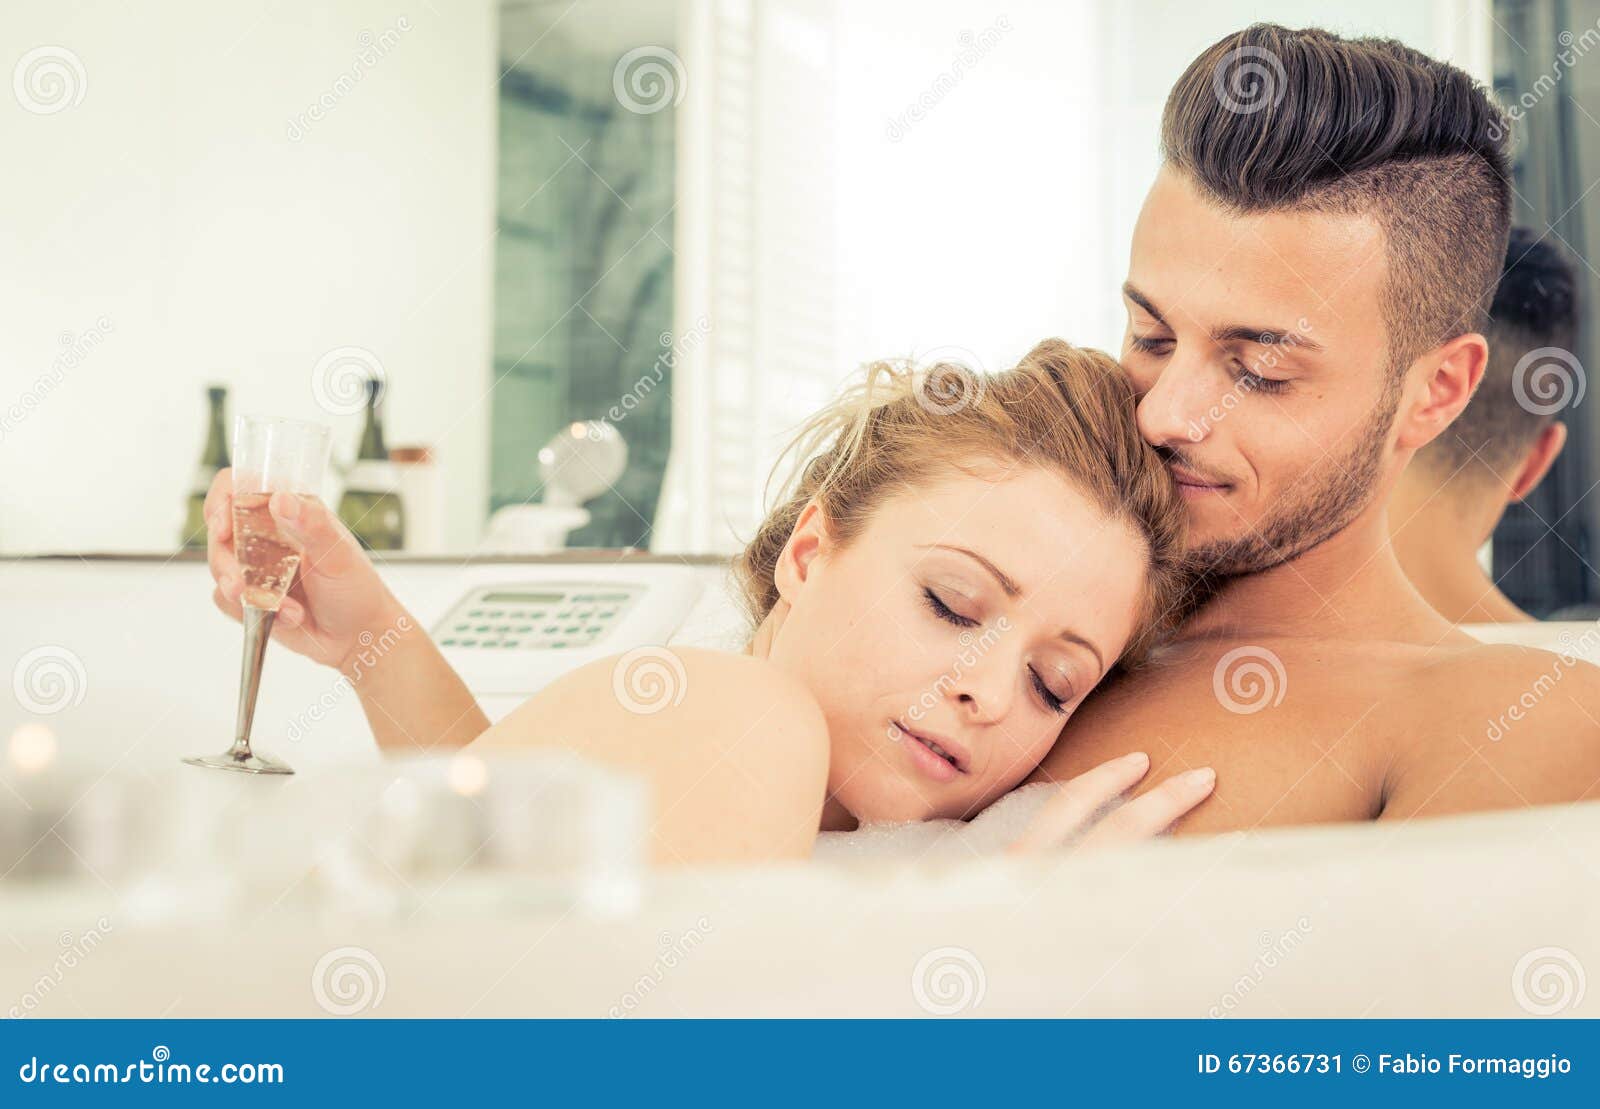 Young Happy Successful Couple Enjoying An Hot Bath Stock Image Im